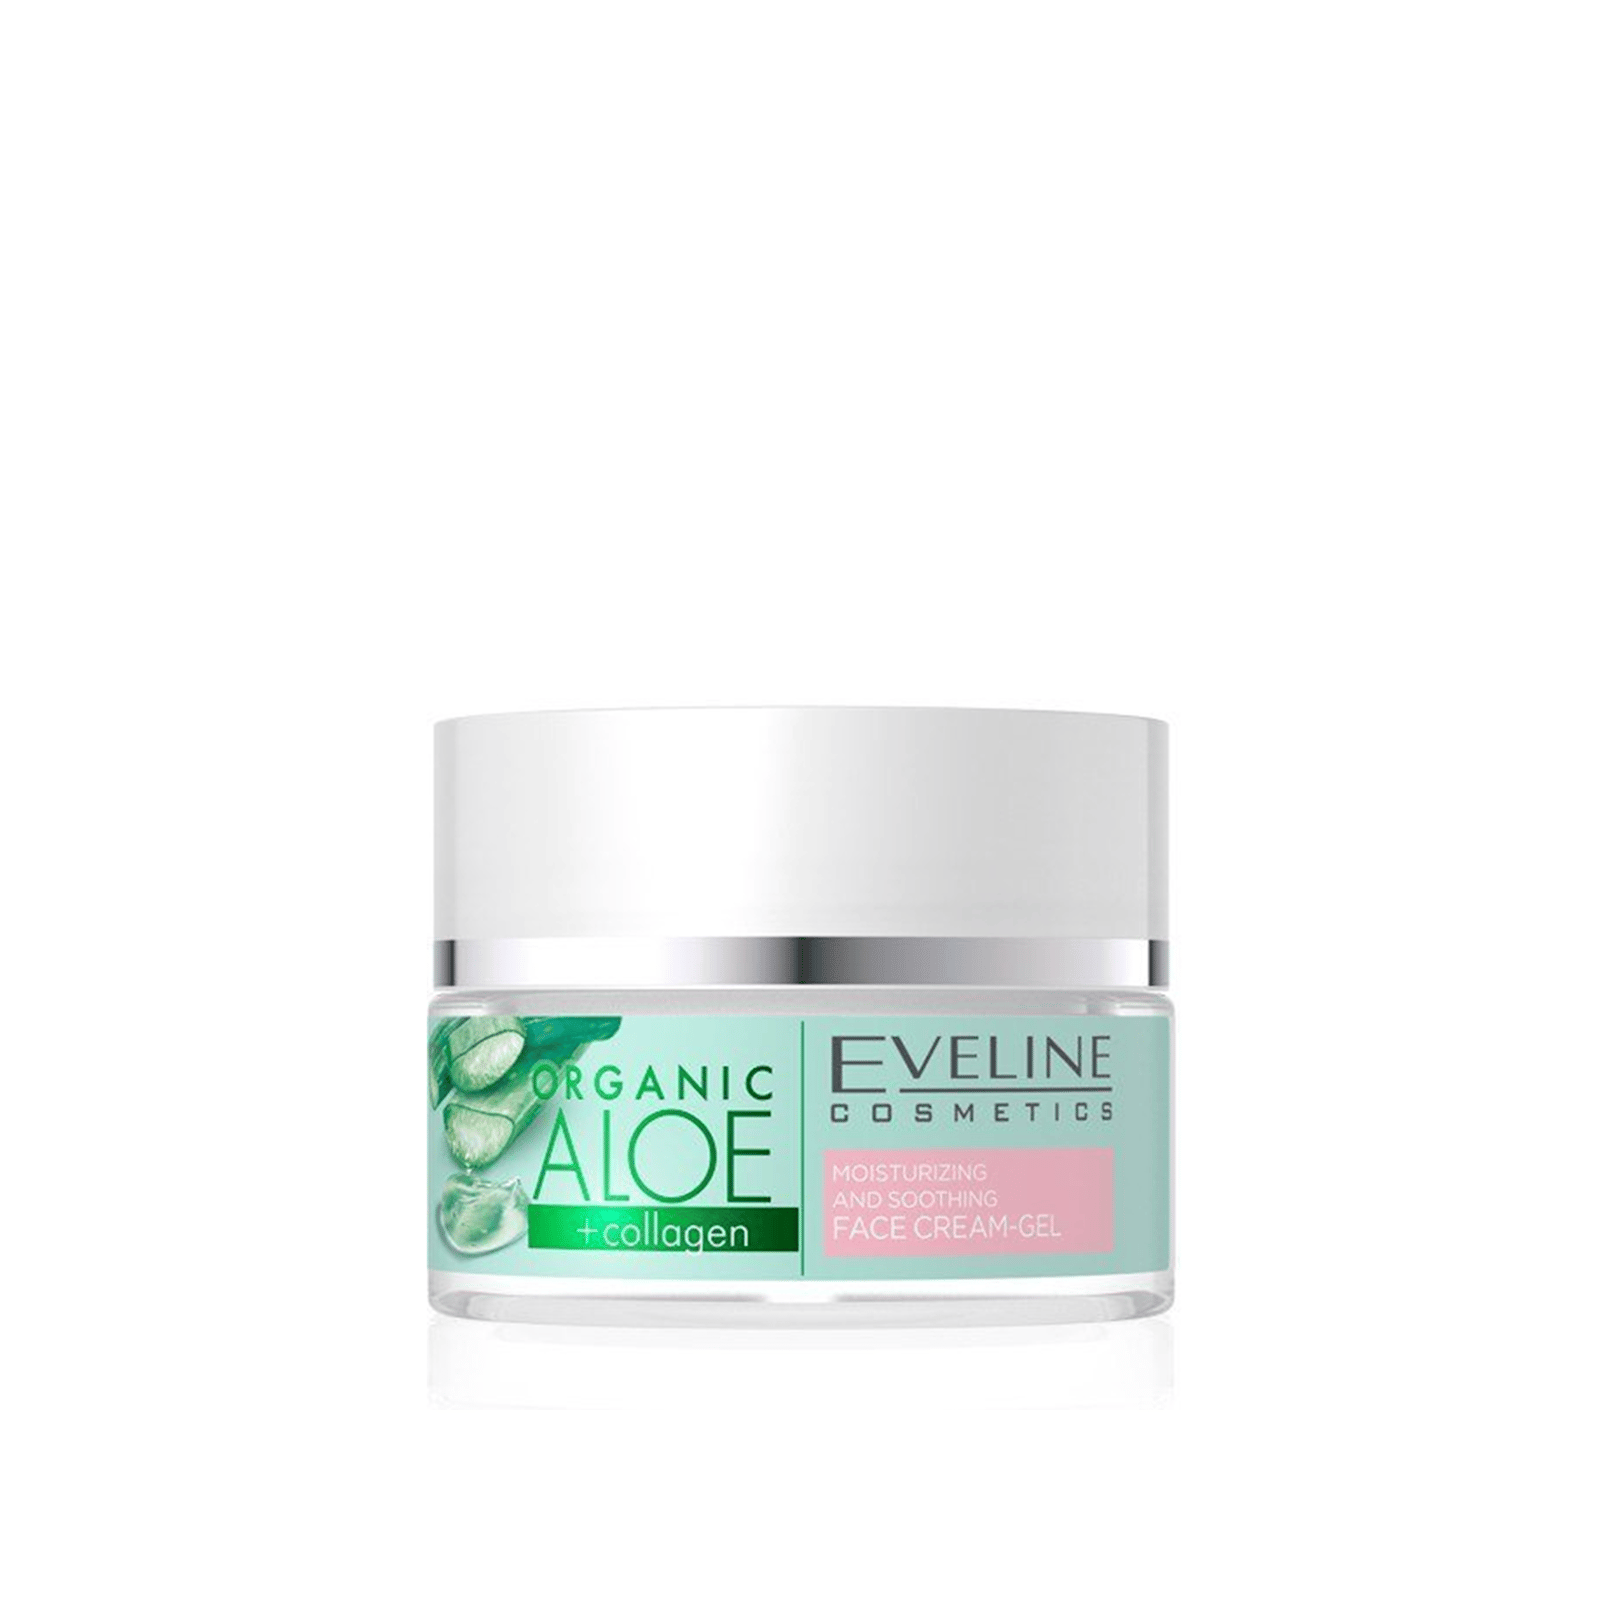 Eveline Cosmetics Organic Aloe Moisturizing and Soothing Face Cream-Gel 50ml (1.76 fl oz)